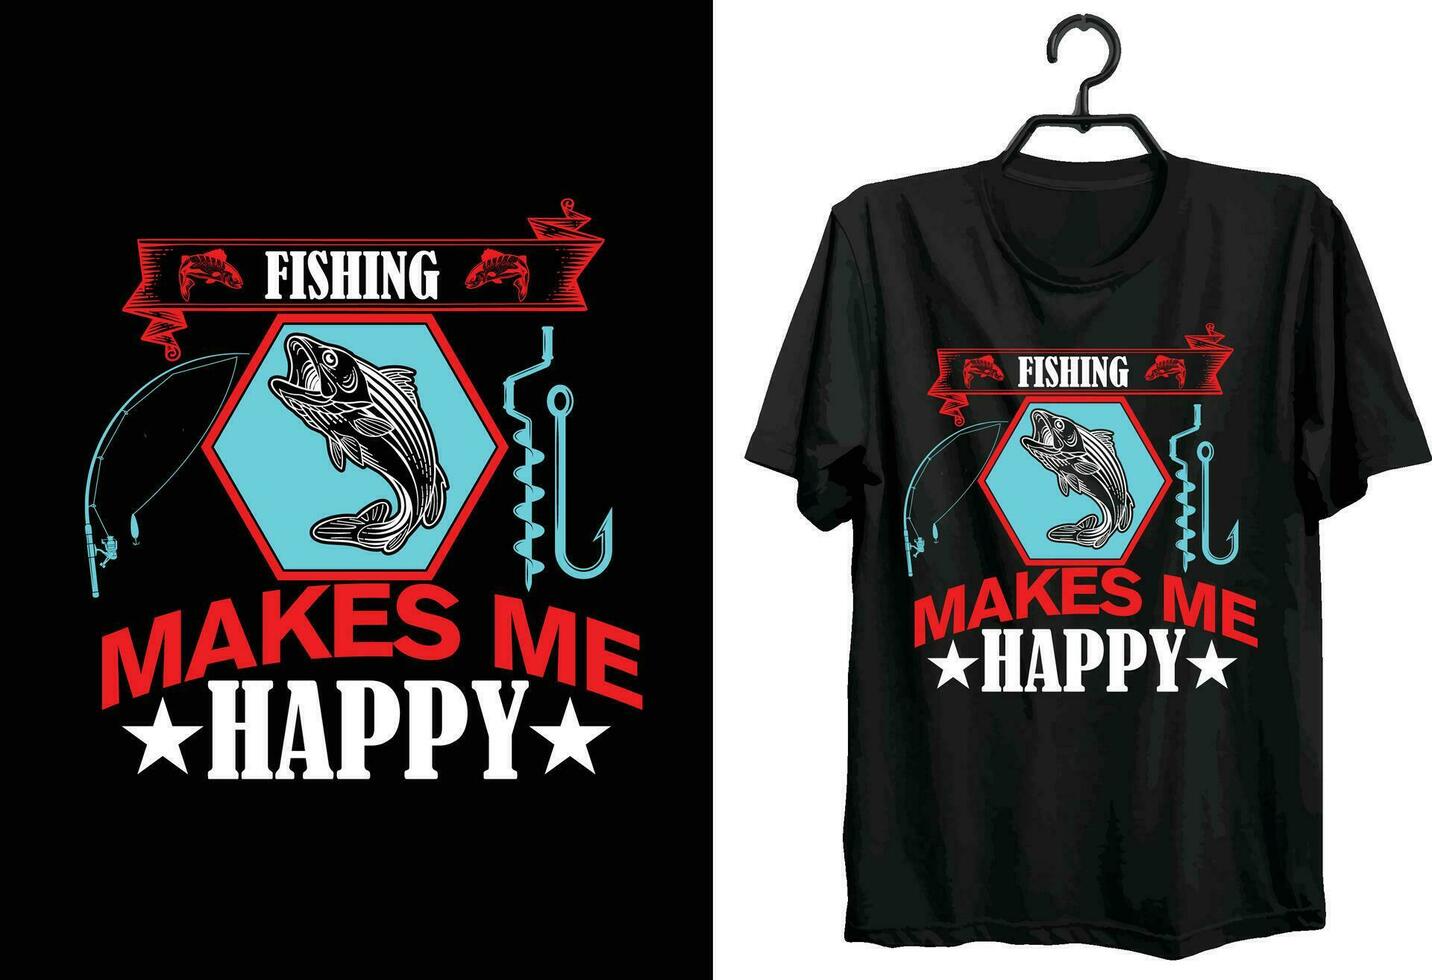 pêche T-shirt conception. typographie, coutume, vecteur T-shirt conception. monde pêche tournoi T-shirt conception